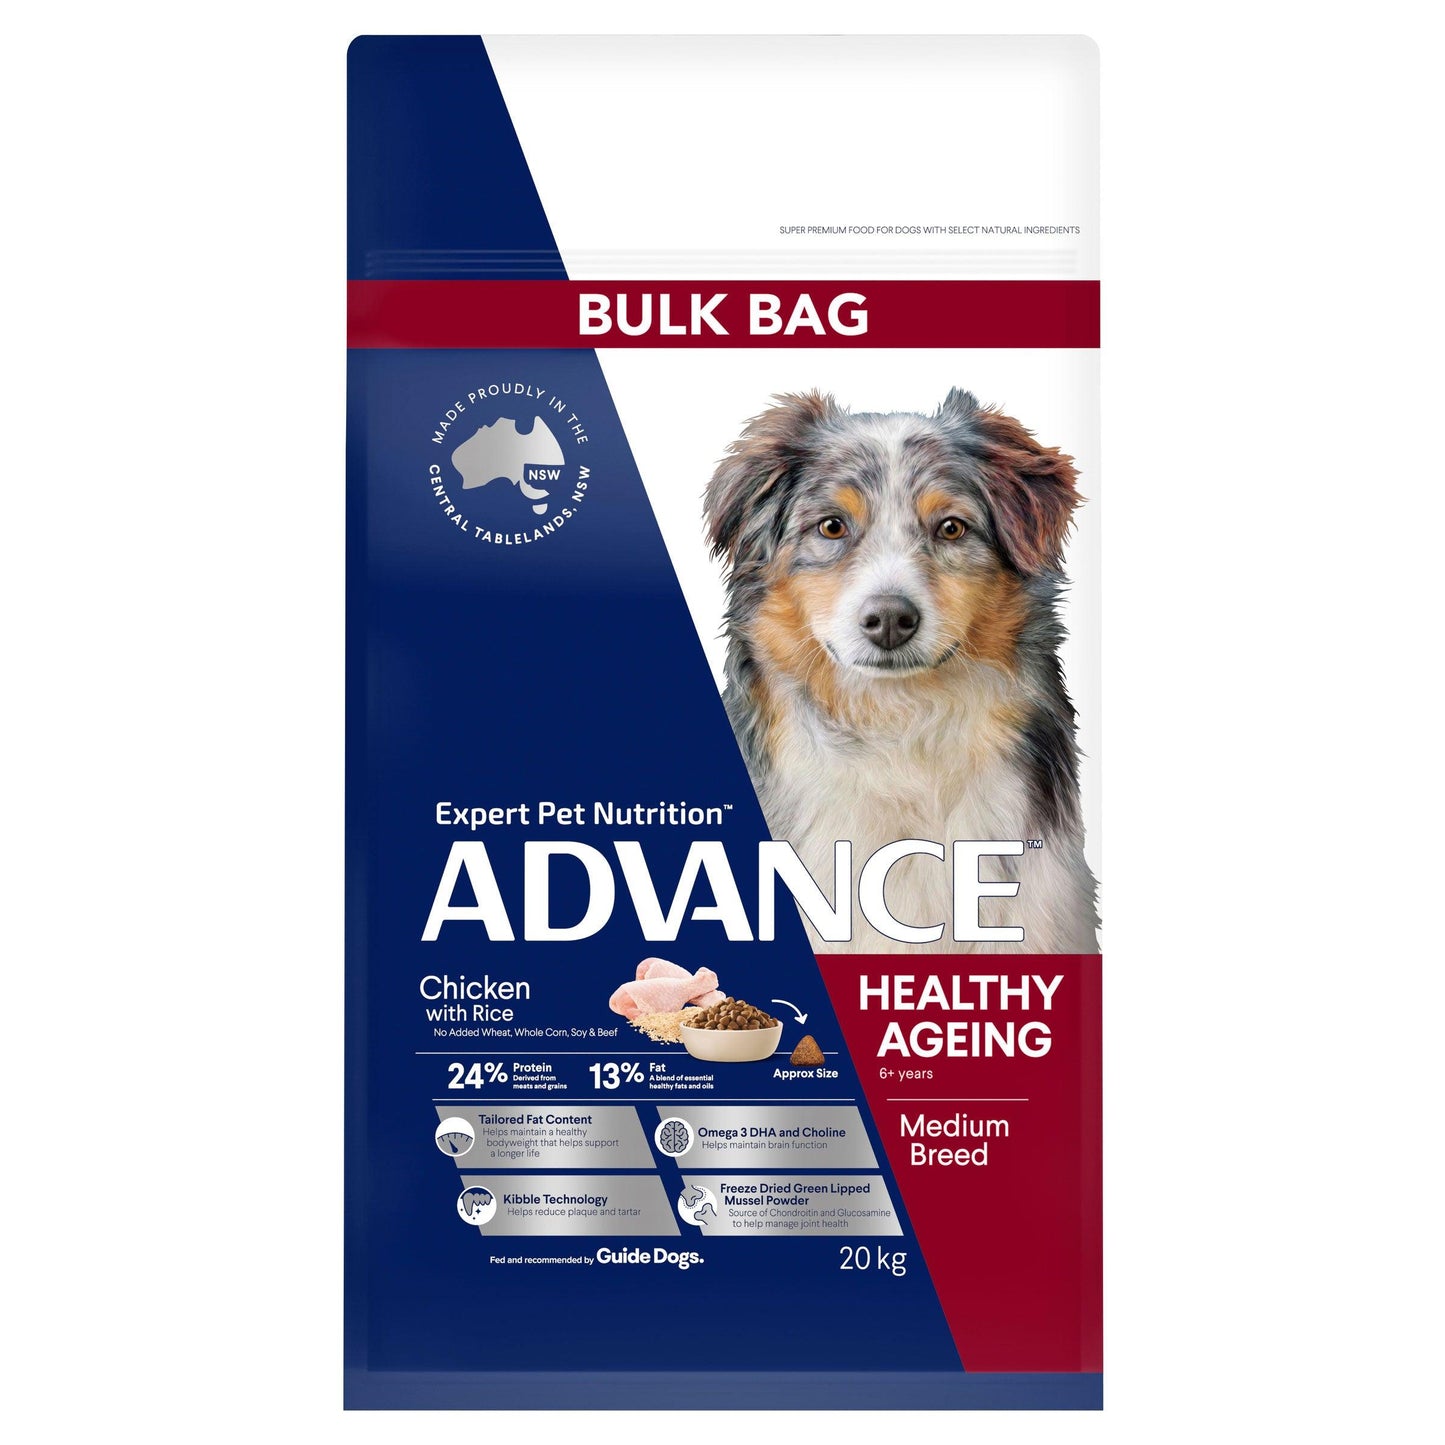 Advance Mature Medium Breed Chicken Dry Dog Food 15kg